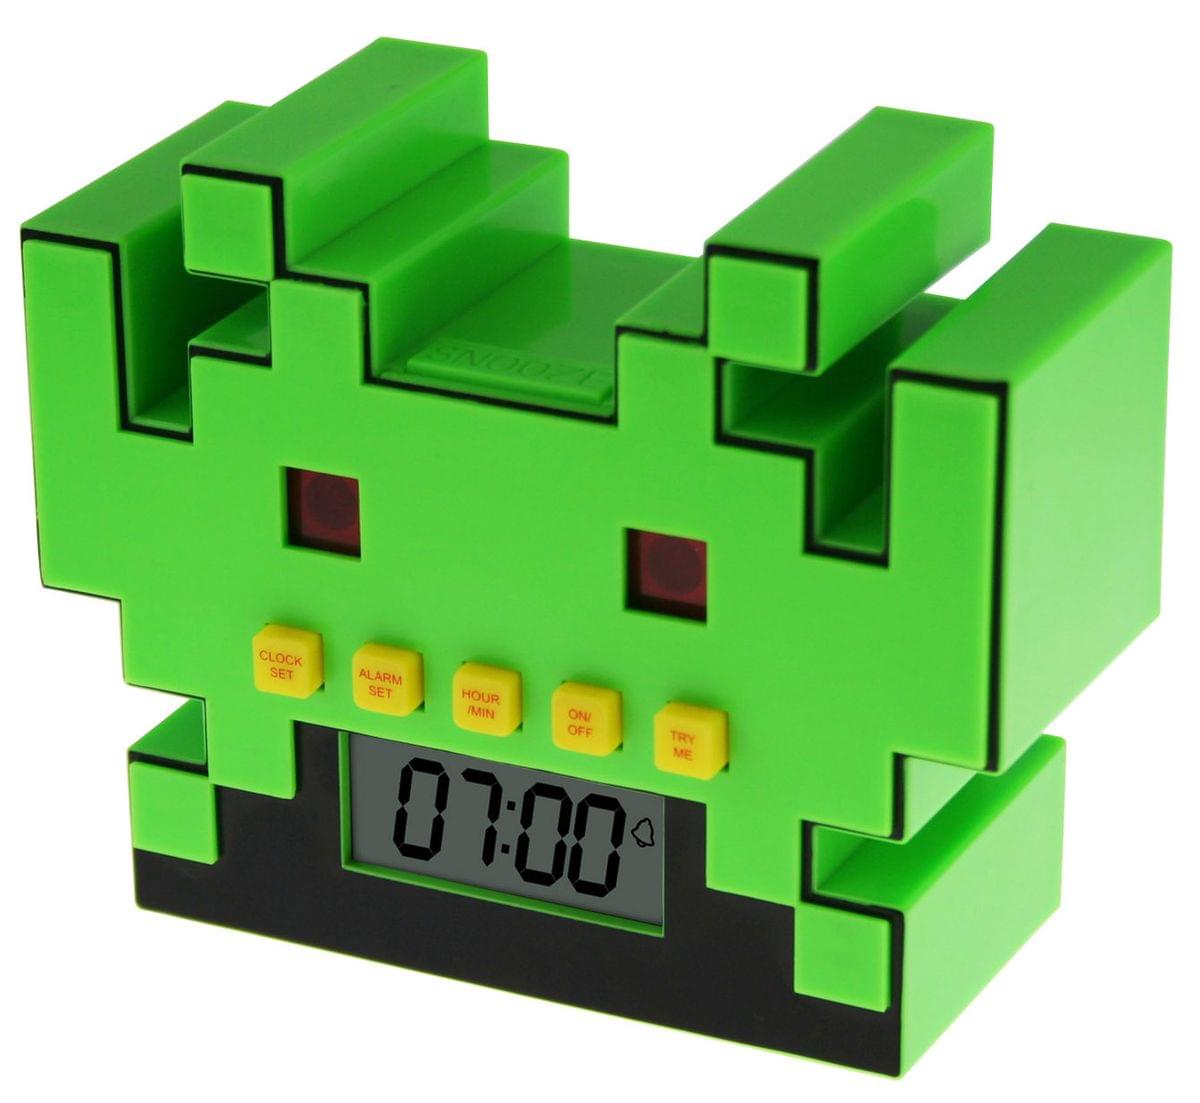 Space Invaders Digital Alarm Clock